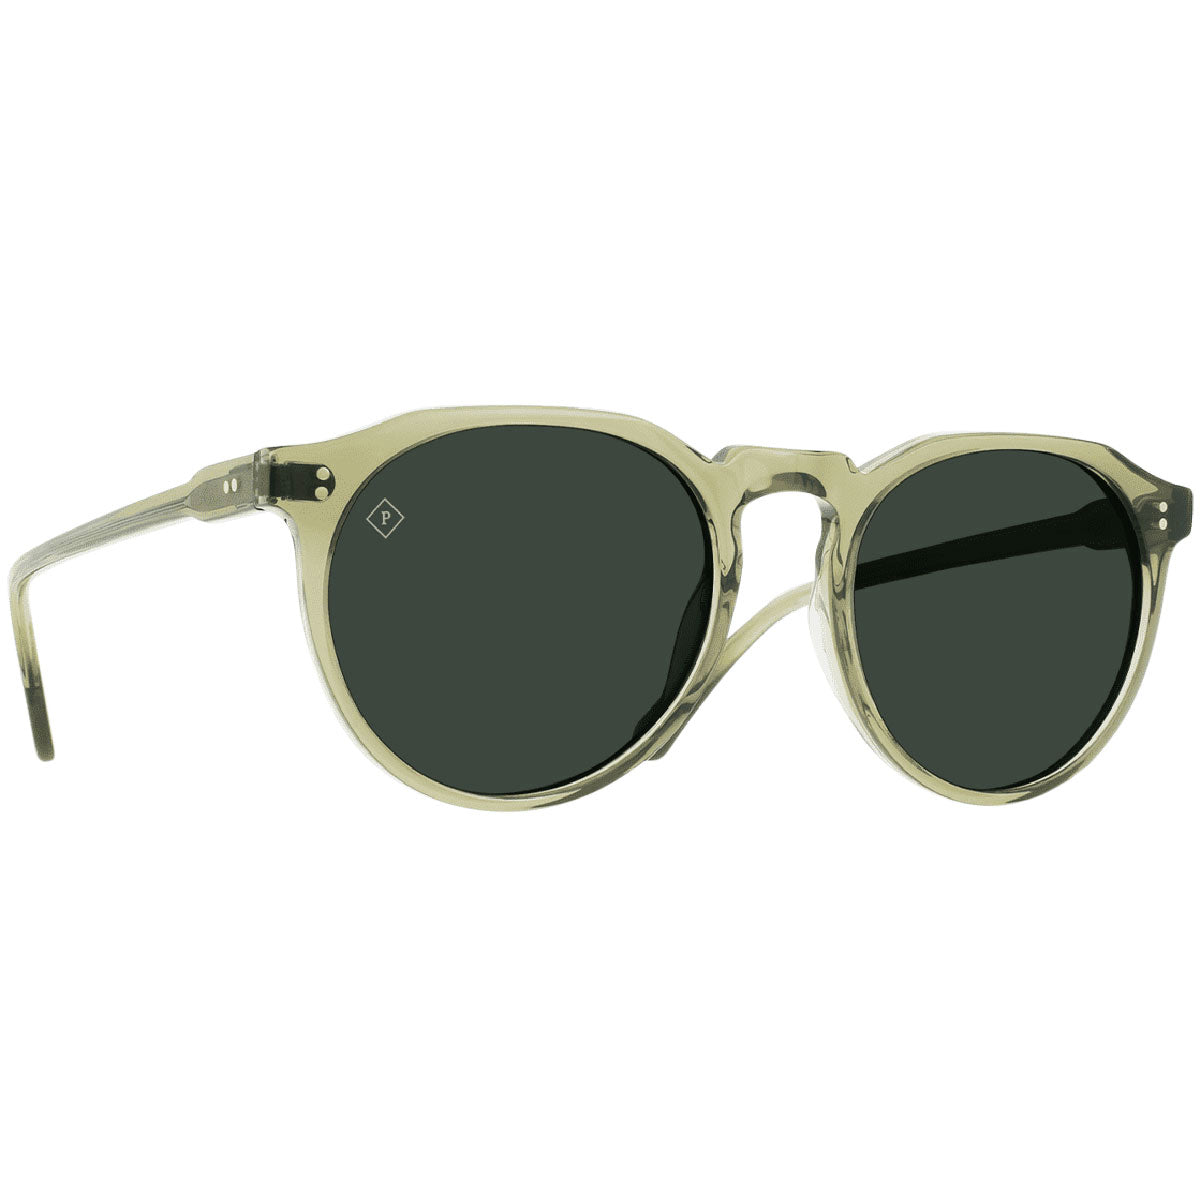 Raen Remmy 52 Sunglasses - Cambria/Green Polarized image 1